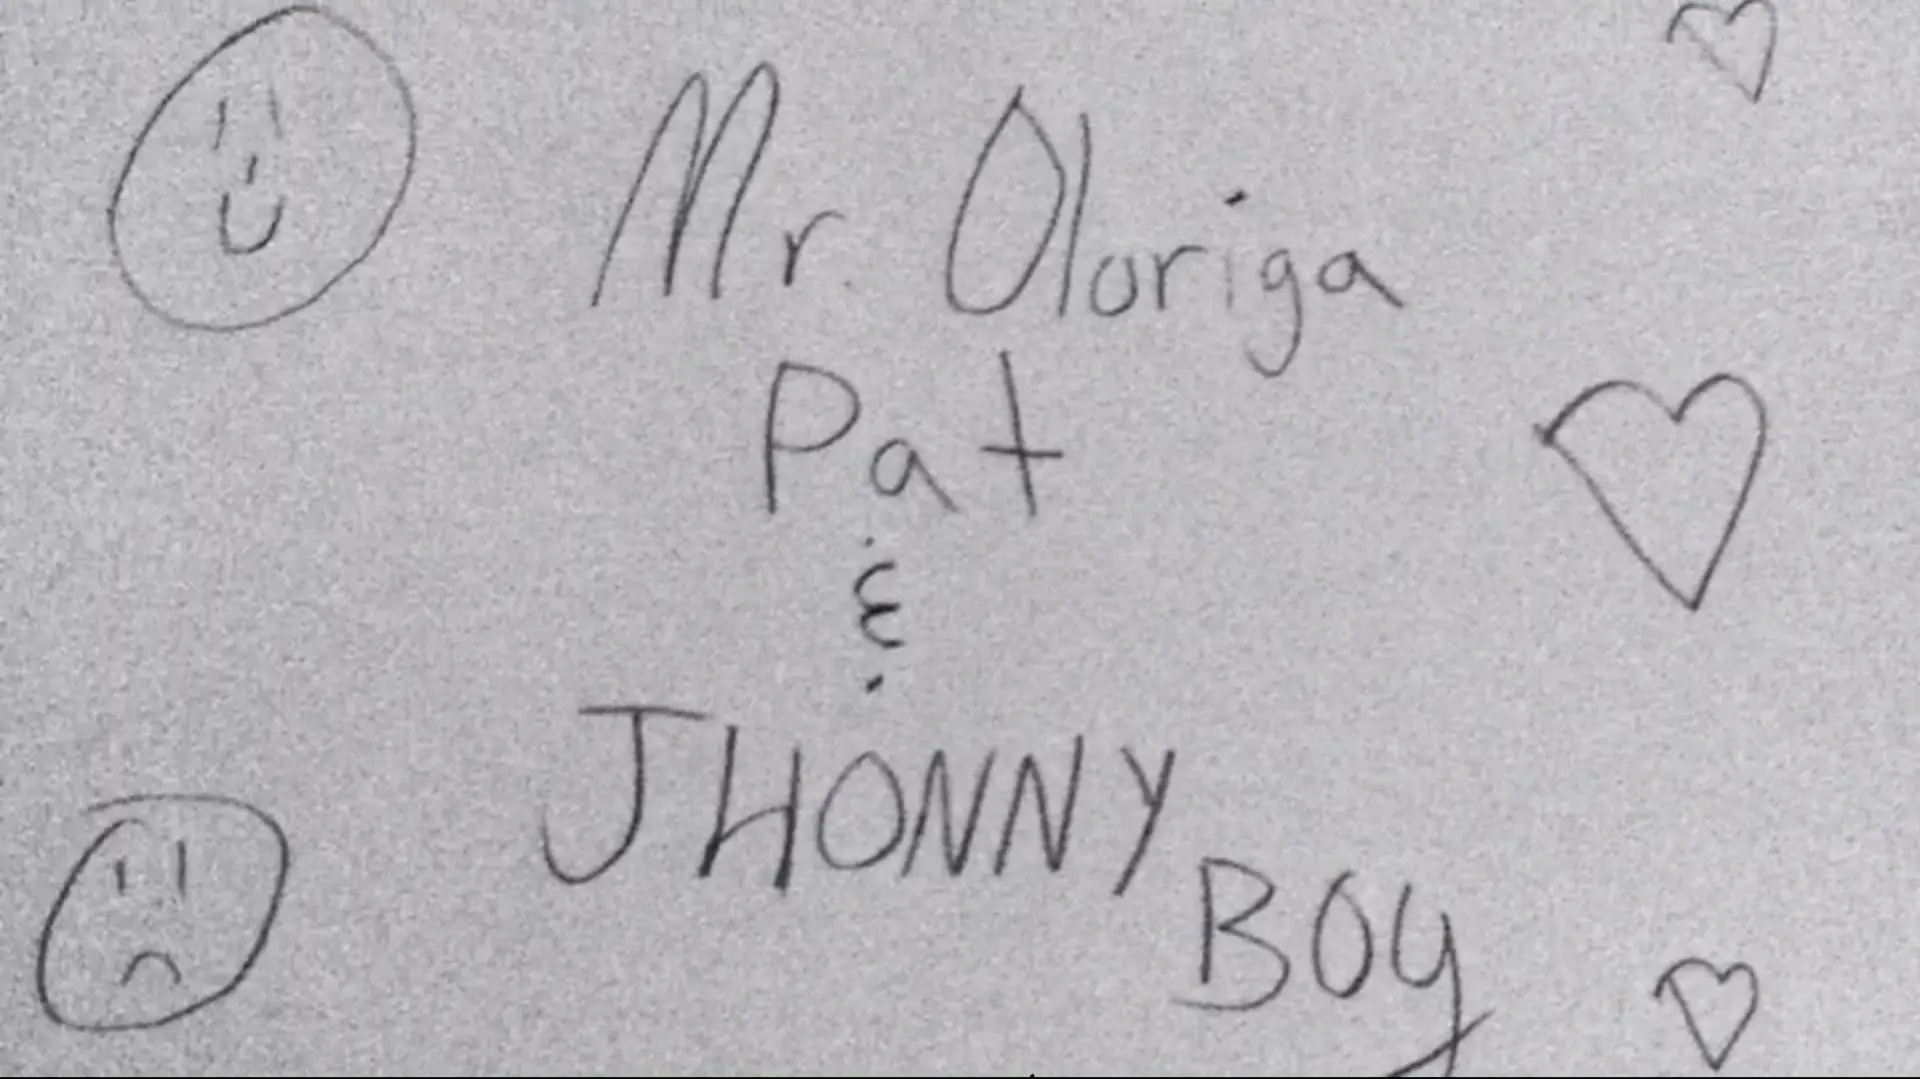 Mr. Oloriga, Pat, and Jhonny Boy_peliplat